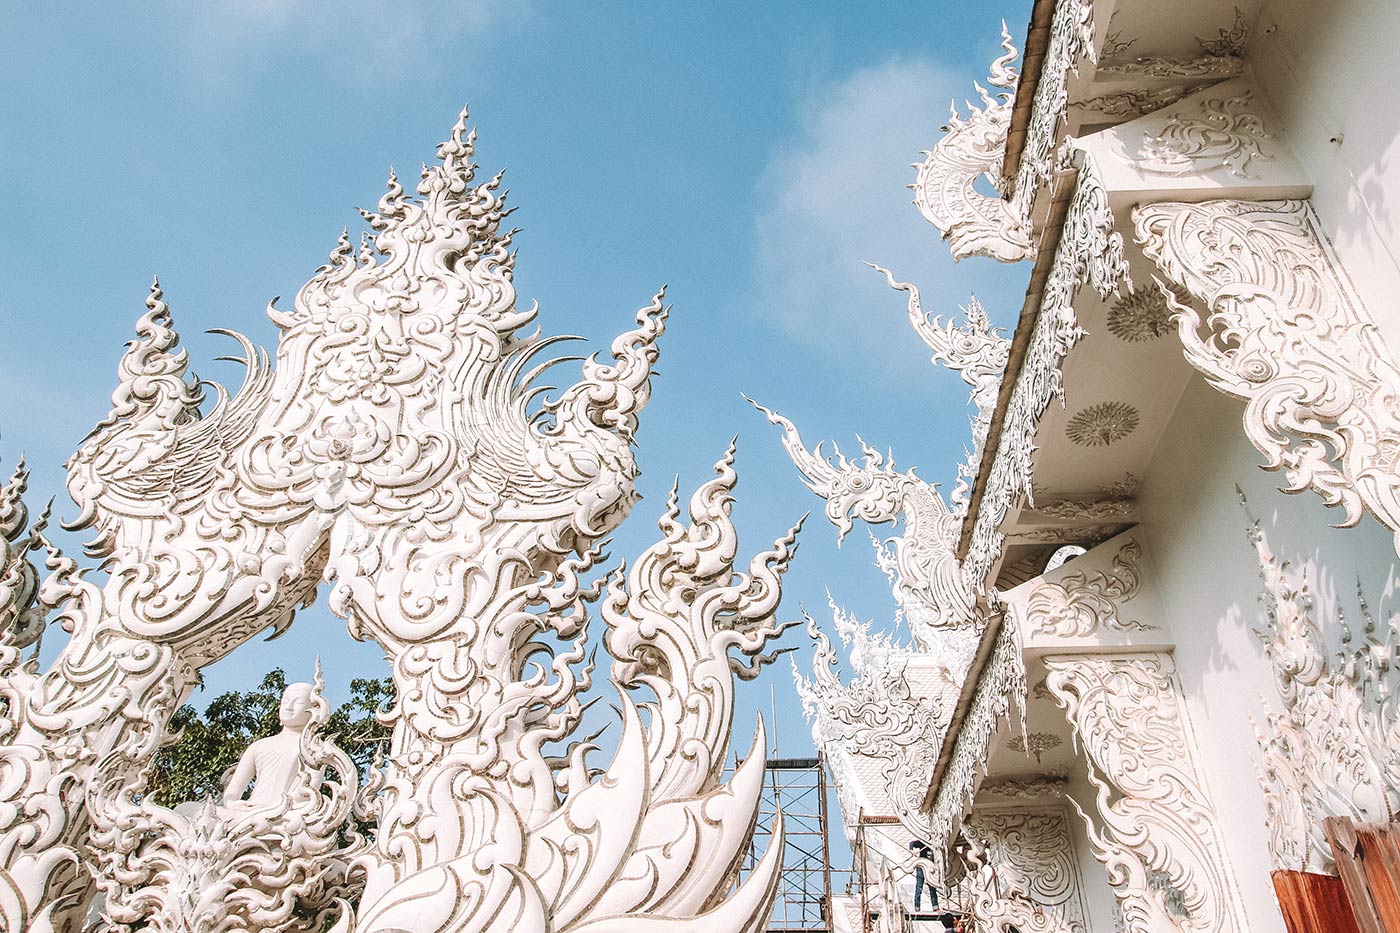 Visiting the White Temple / Wat Rong Khun in Chiang Rai, Thailand blog post